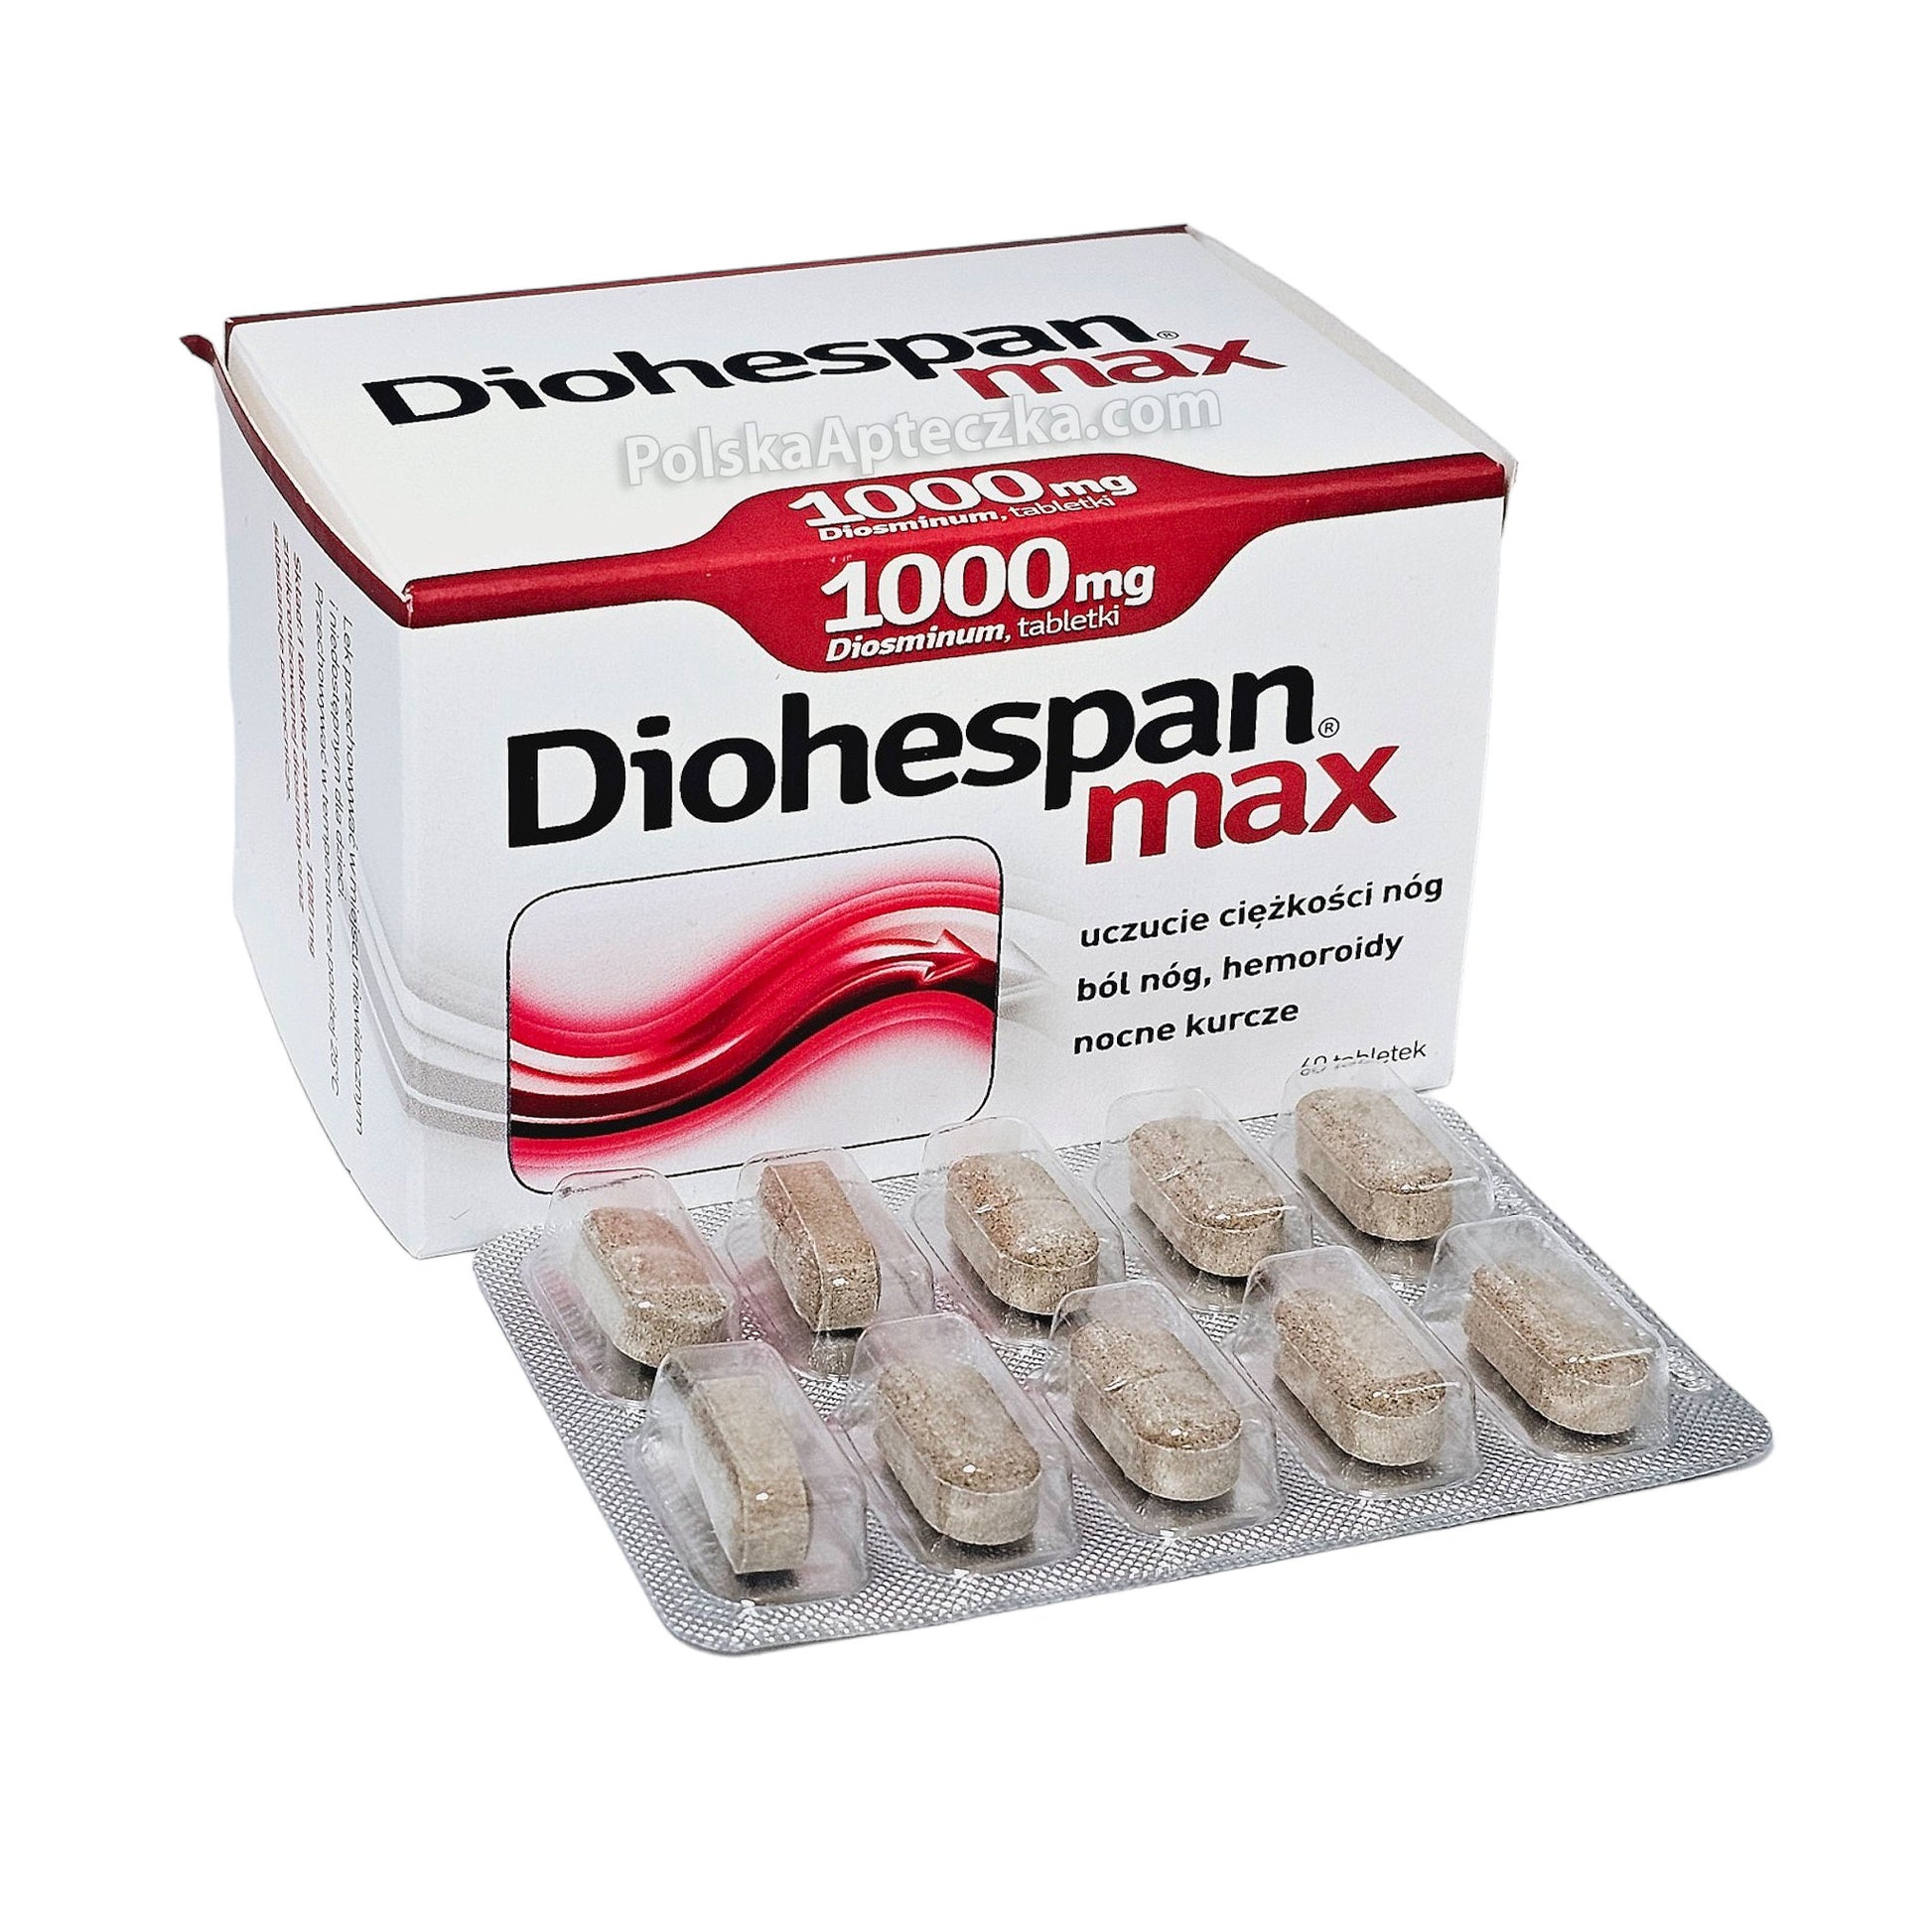 diohespan max tablets